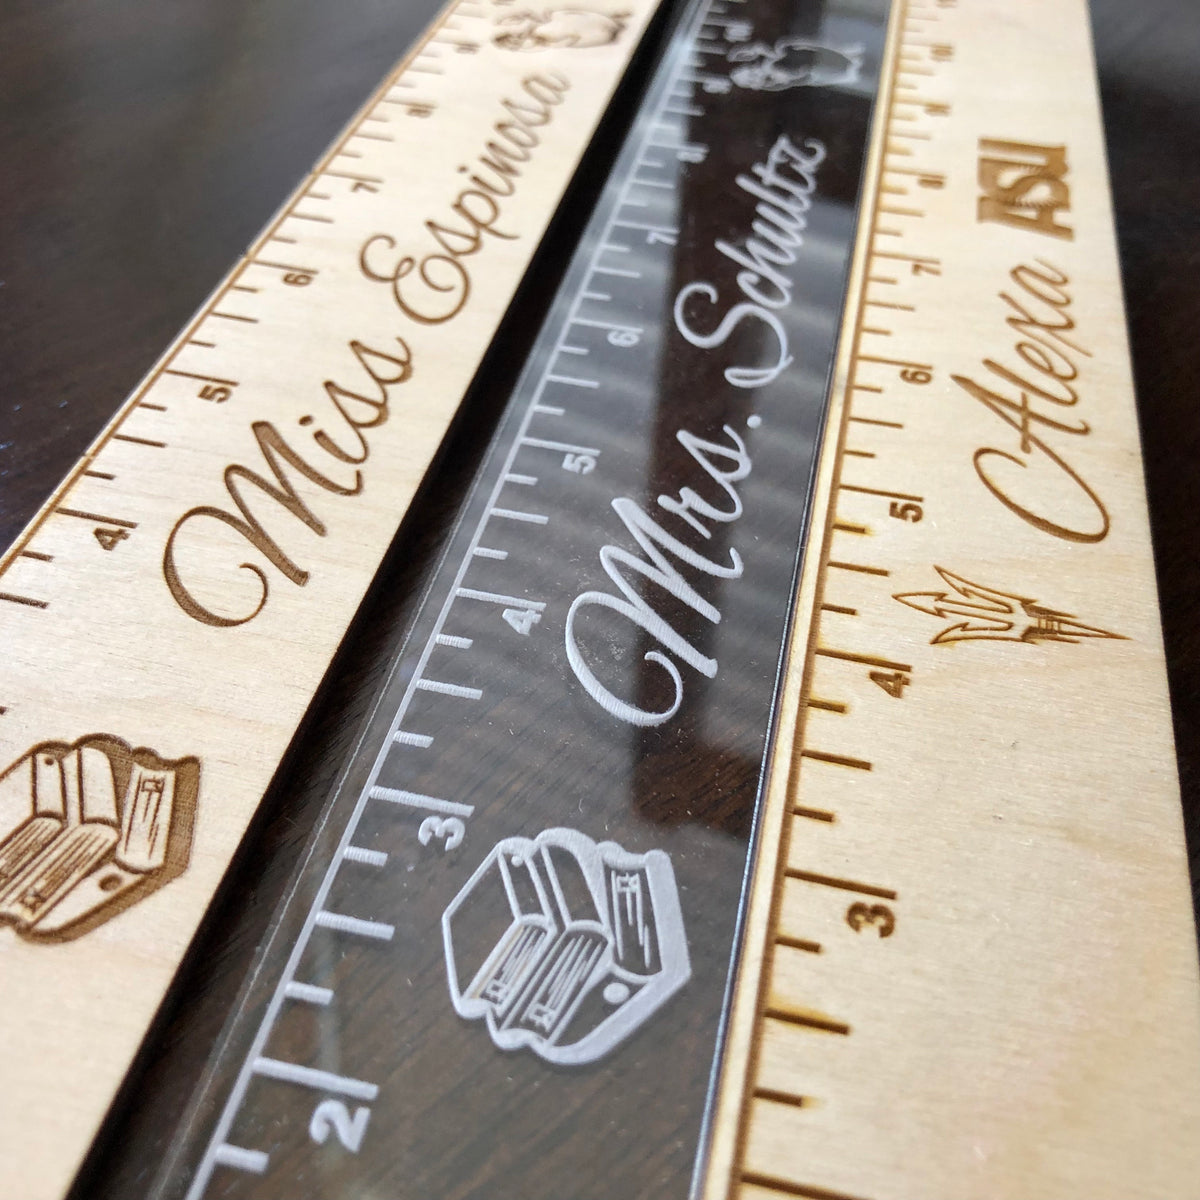 Personalized Custom 6 Acrylic Ruler – PrettyCutePlanner